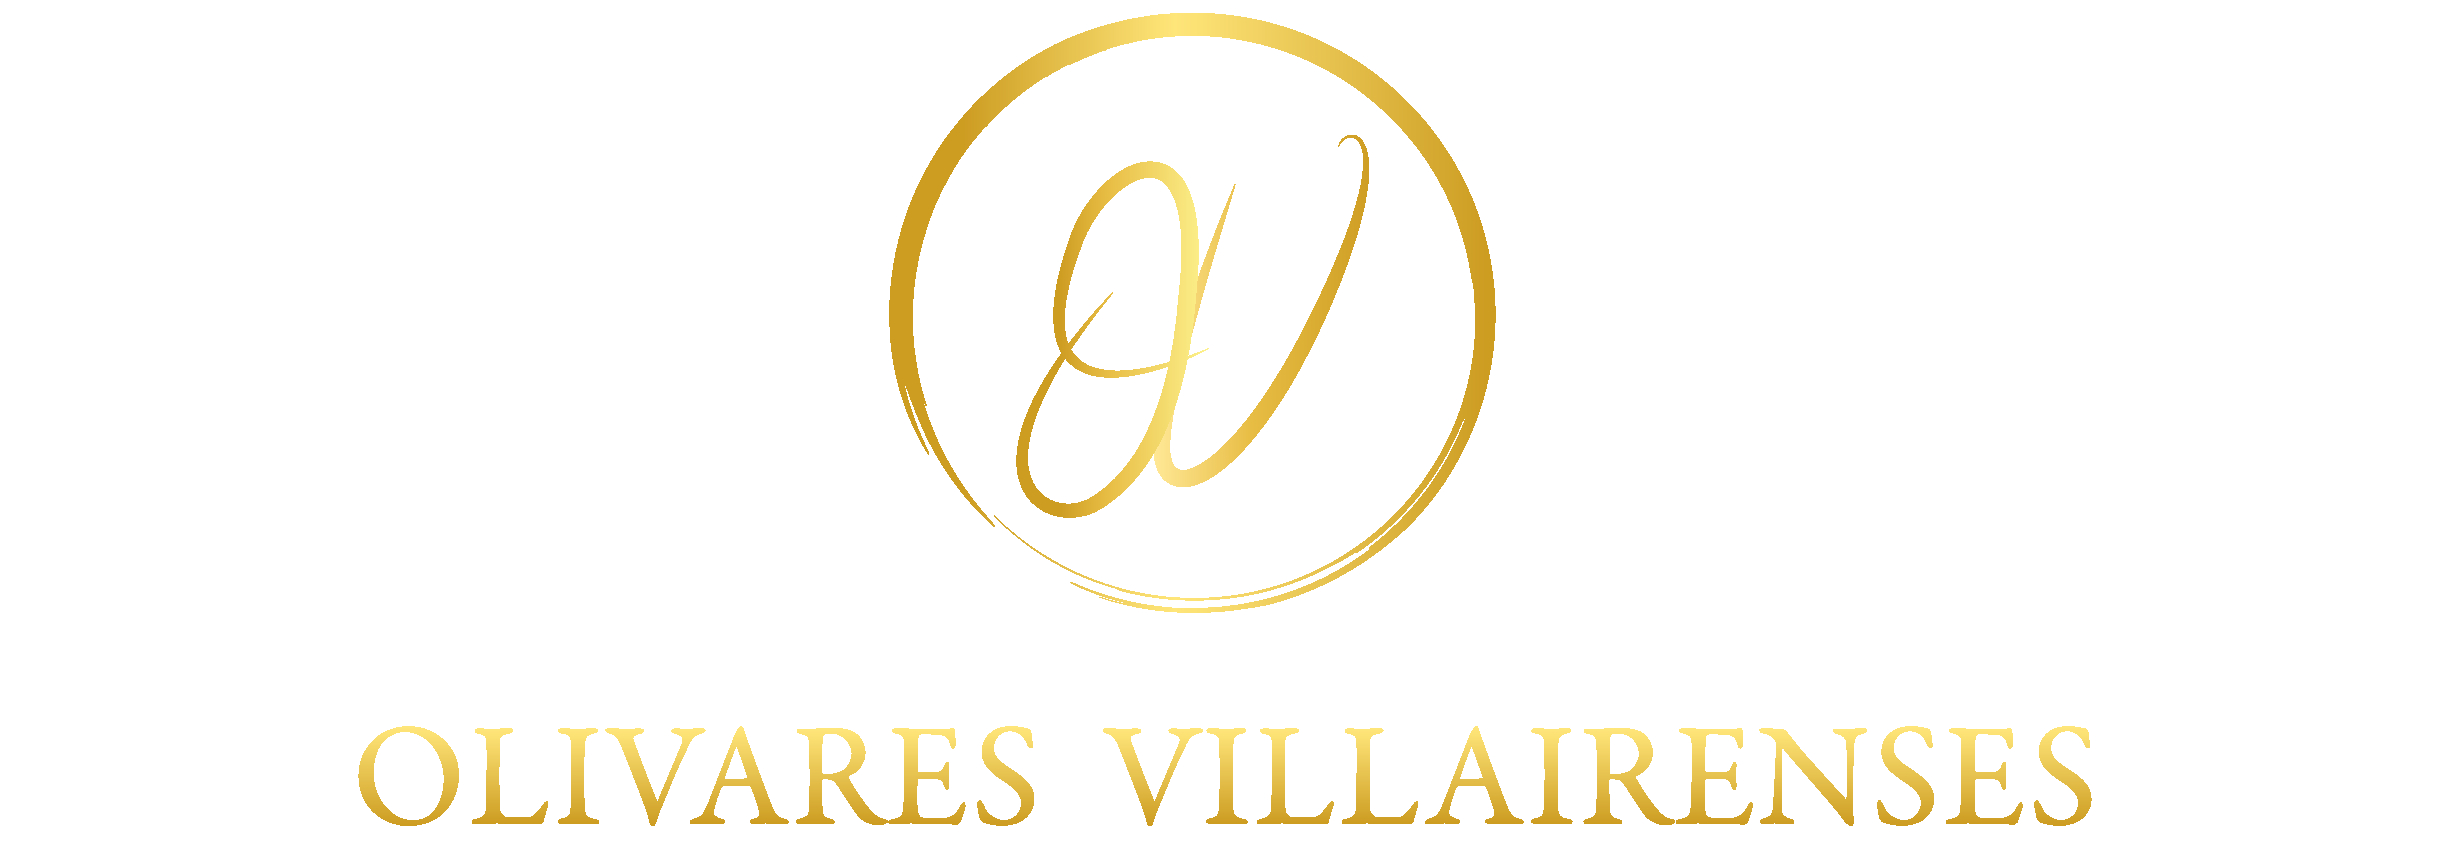 Olivares Villairenses